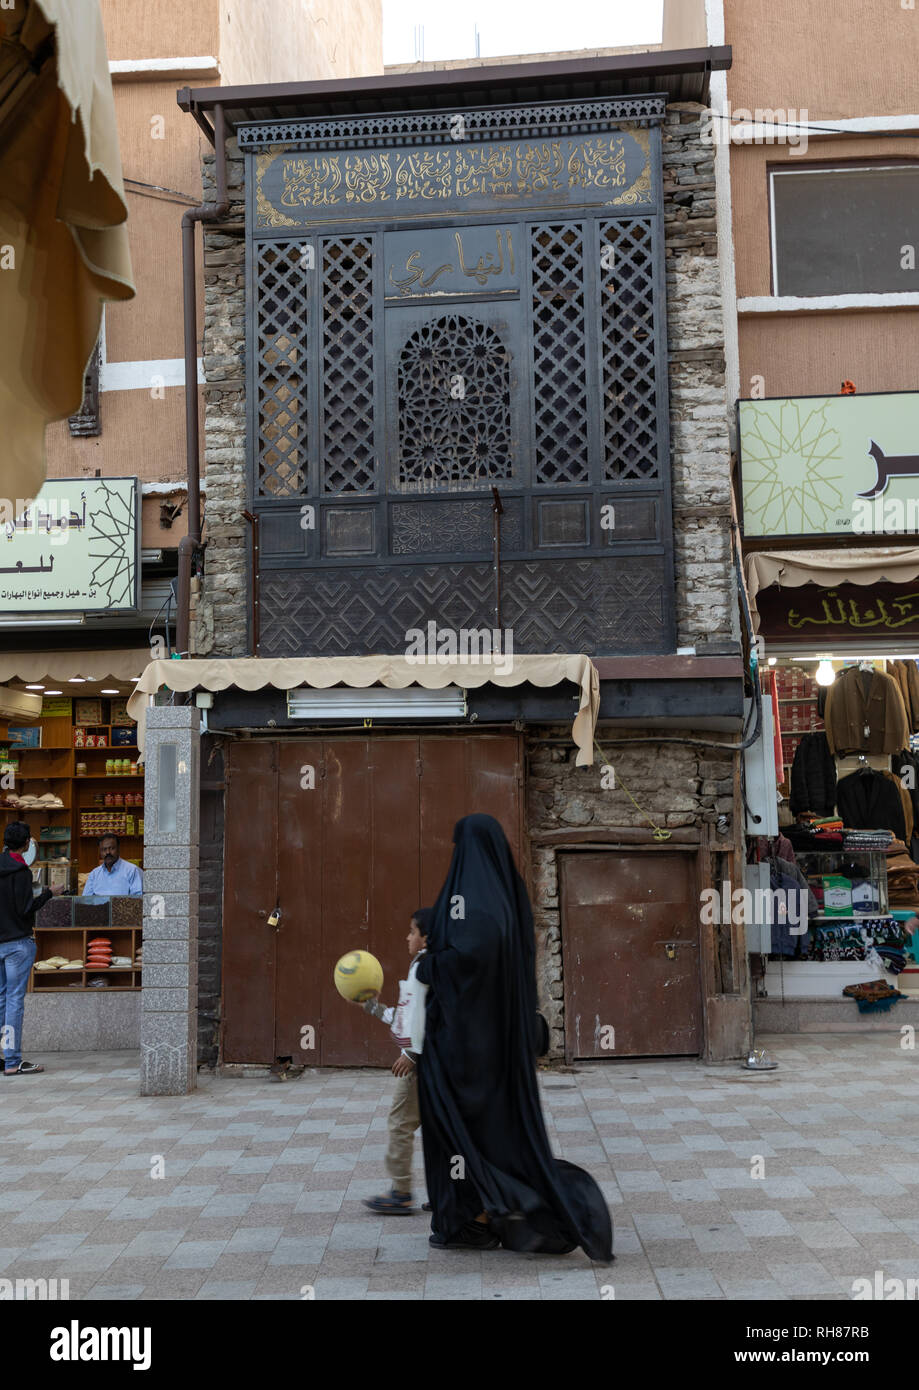 Mashrabiya en bois, province, la Mecque, Arabie saoudite Taïf Banque D'Images